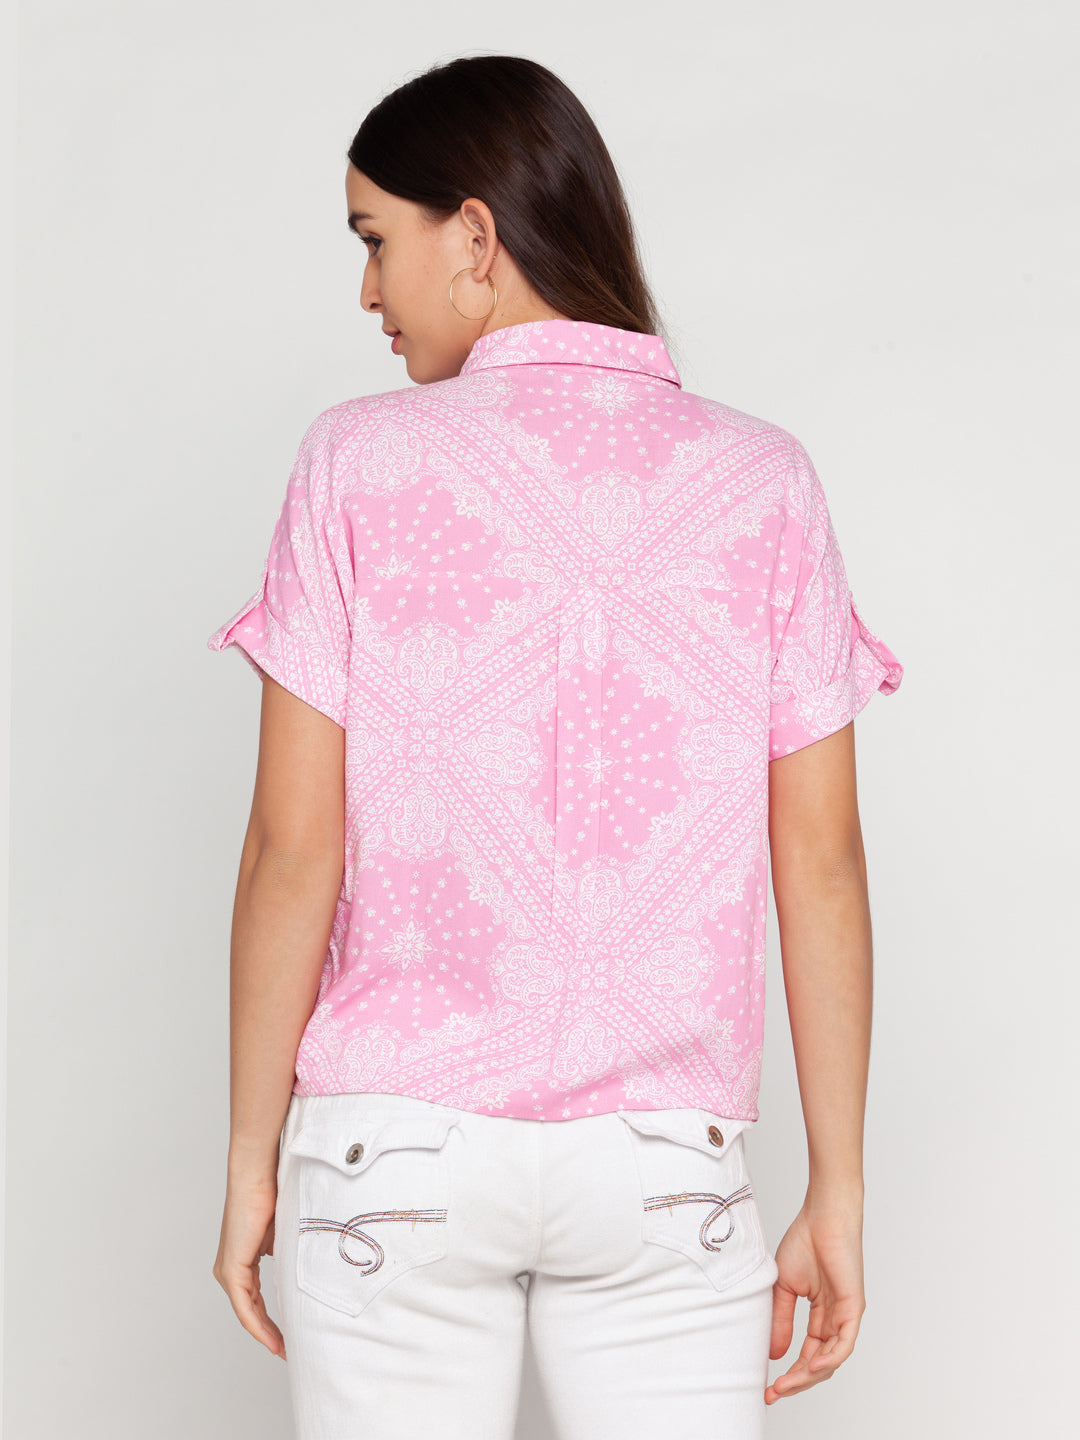 Pink Printed Shirt For Women